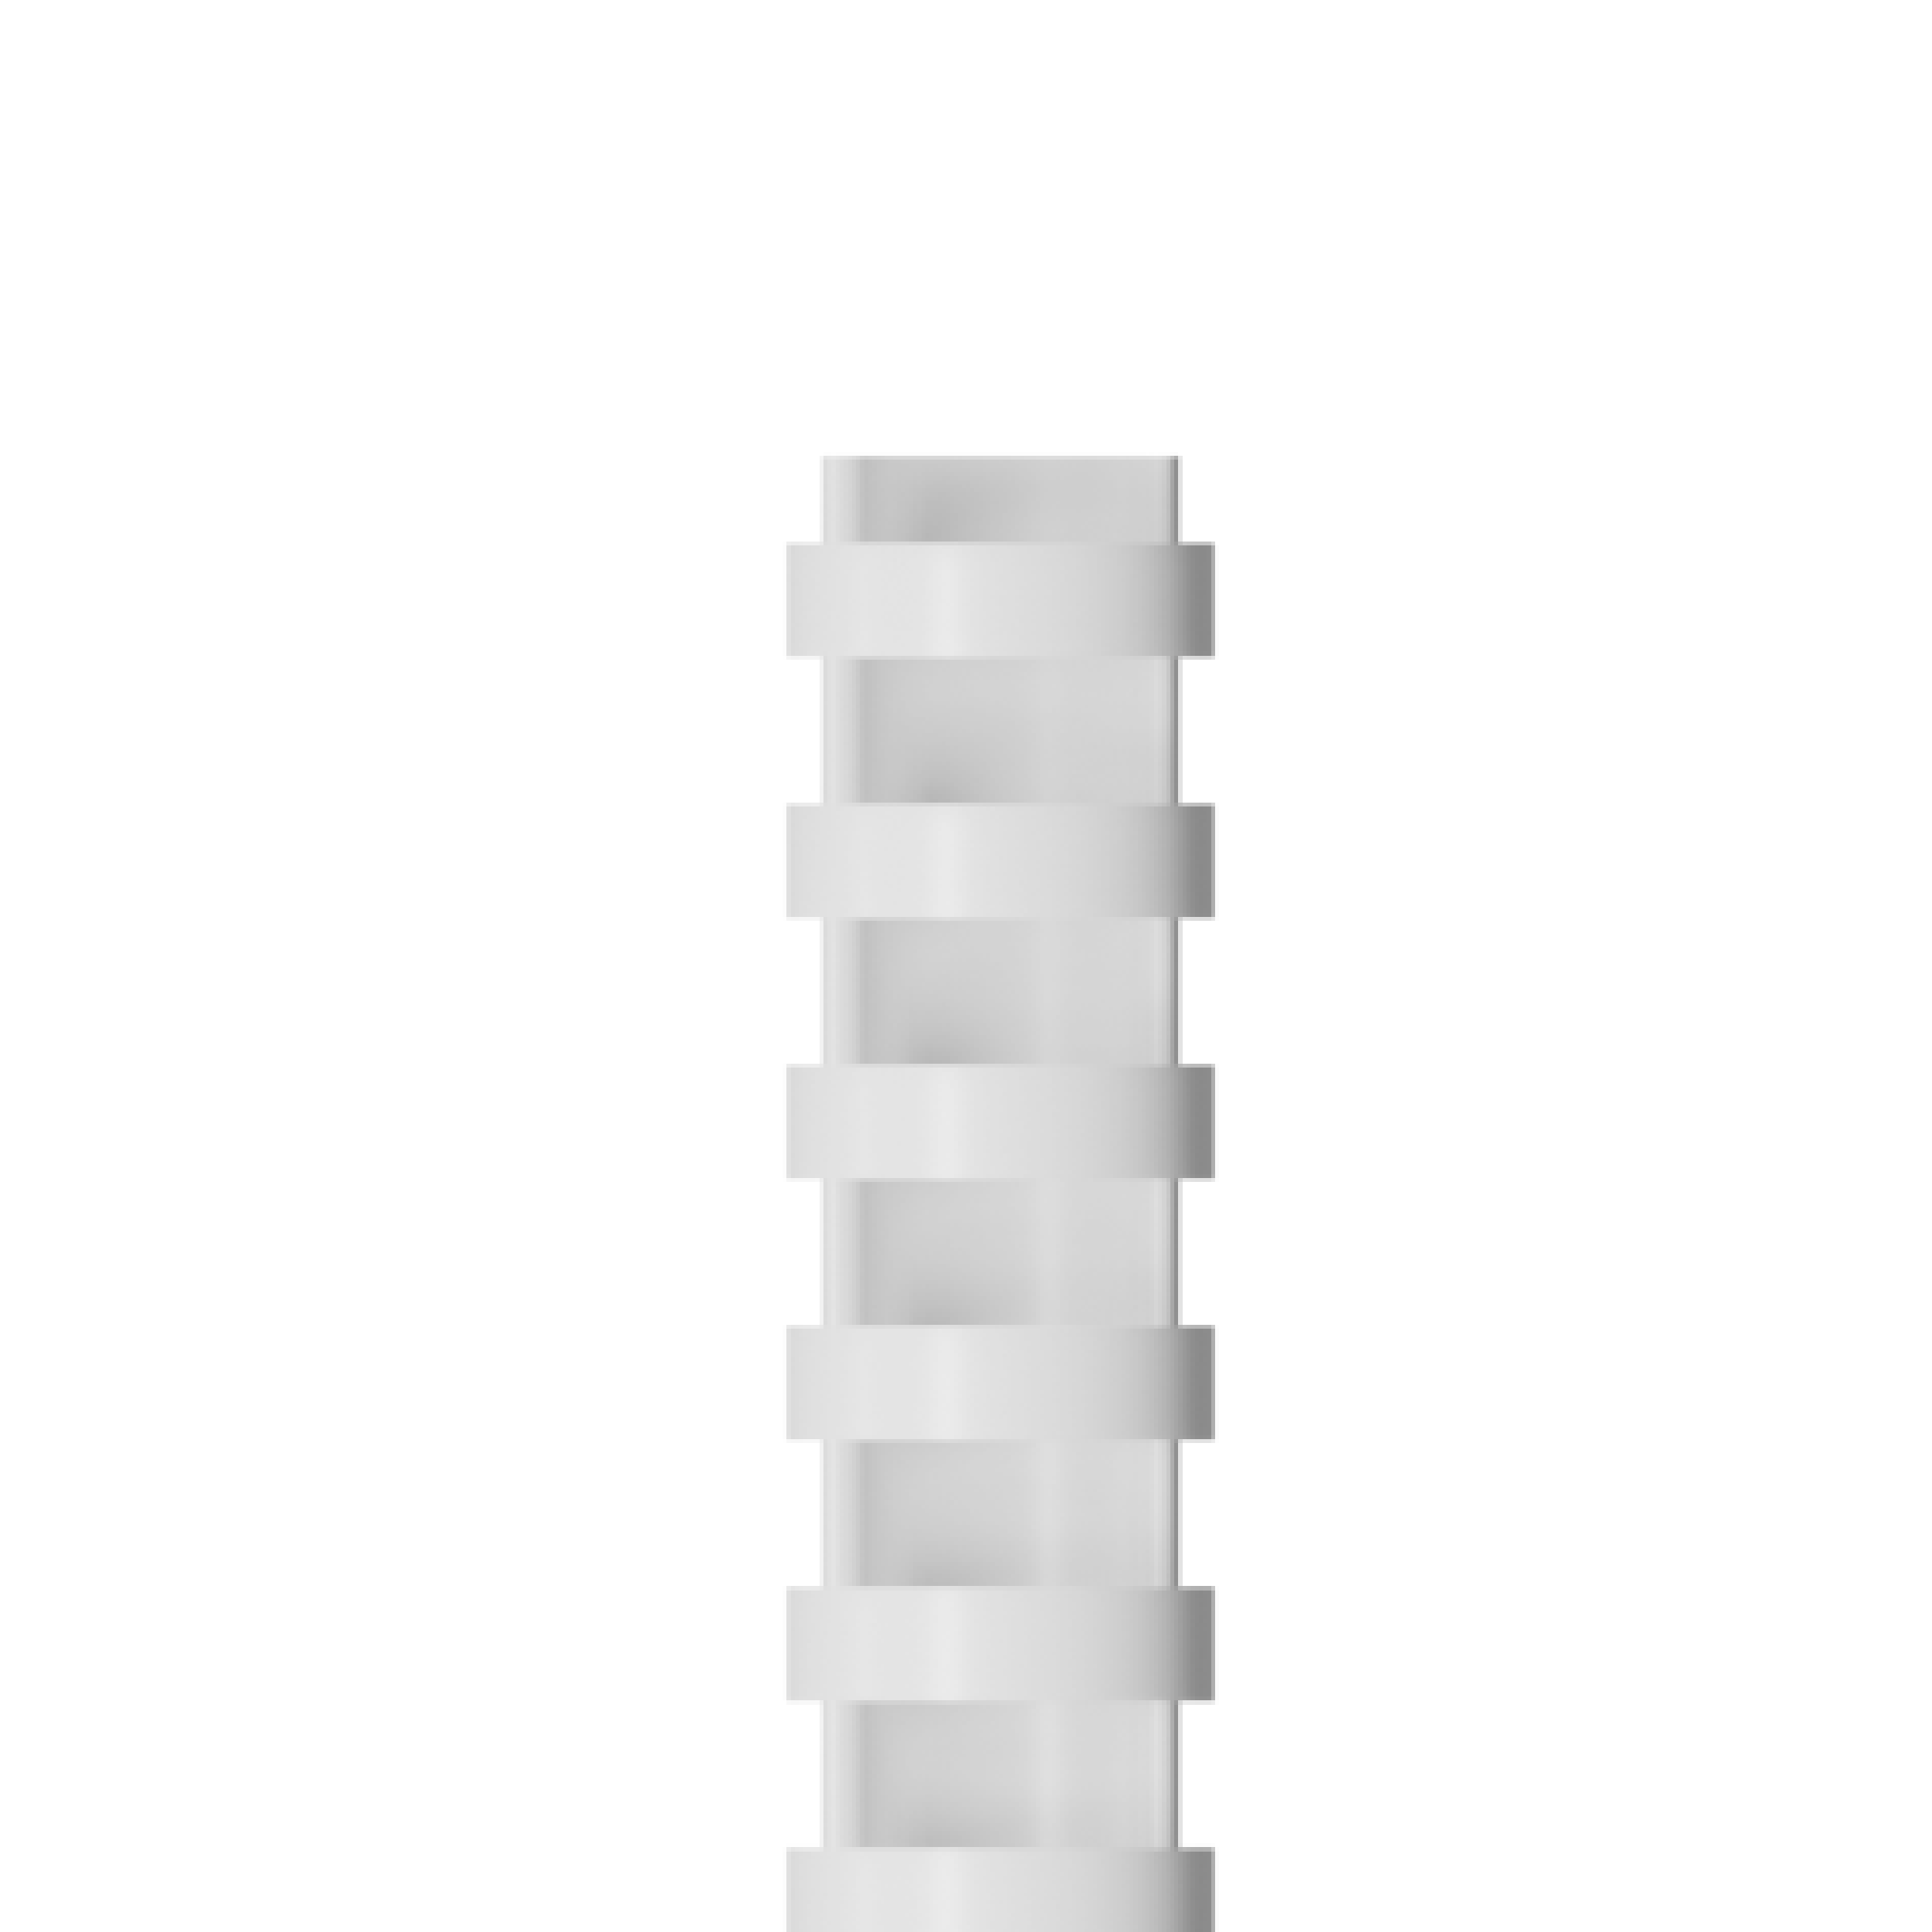 RAADO 22mm Plastic Spiral Binding Comb, White